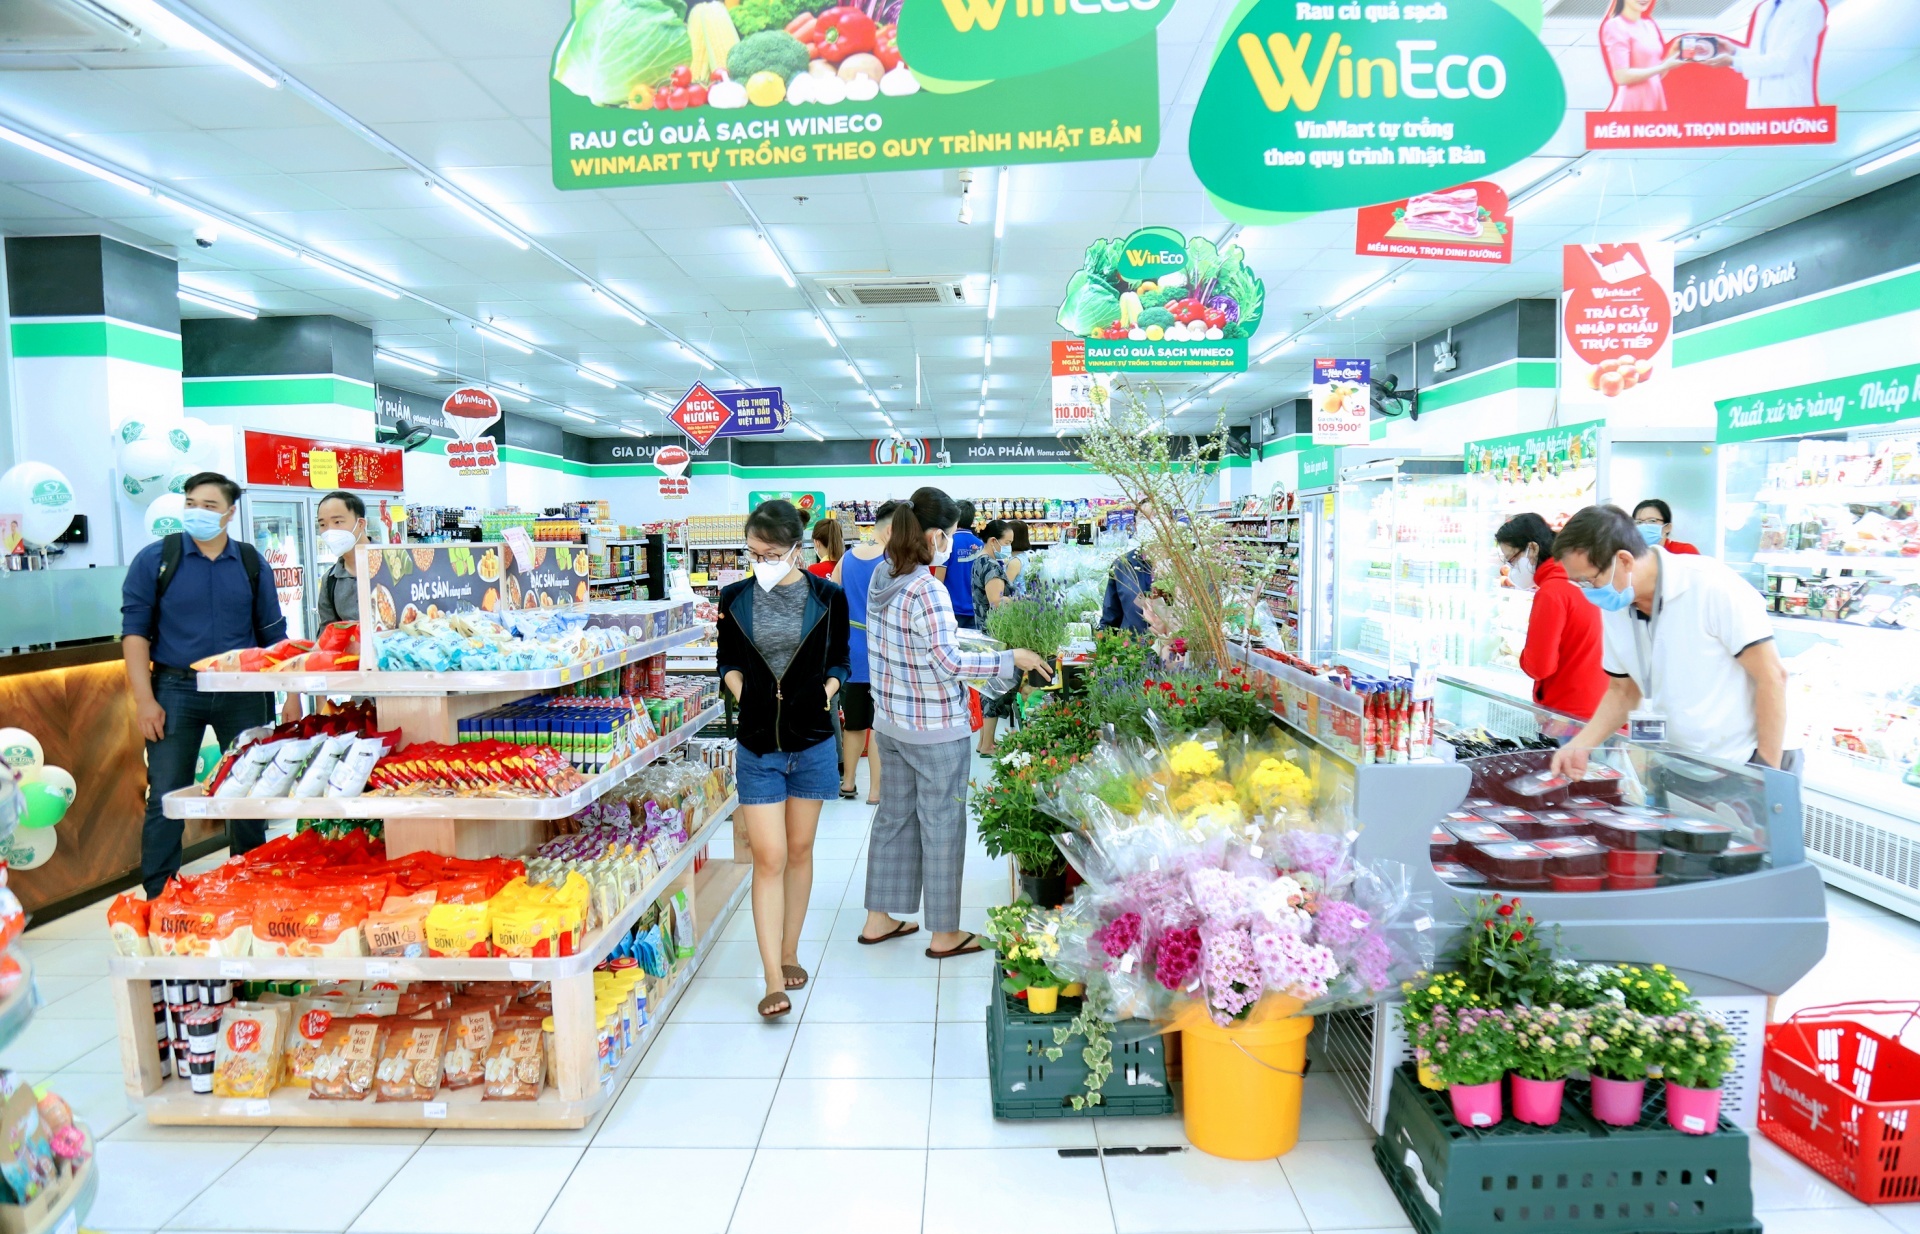 Vietnamese stocks see world-leading growth